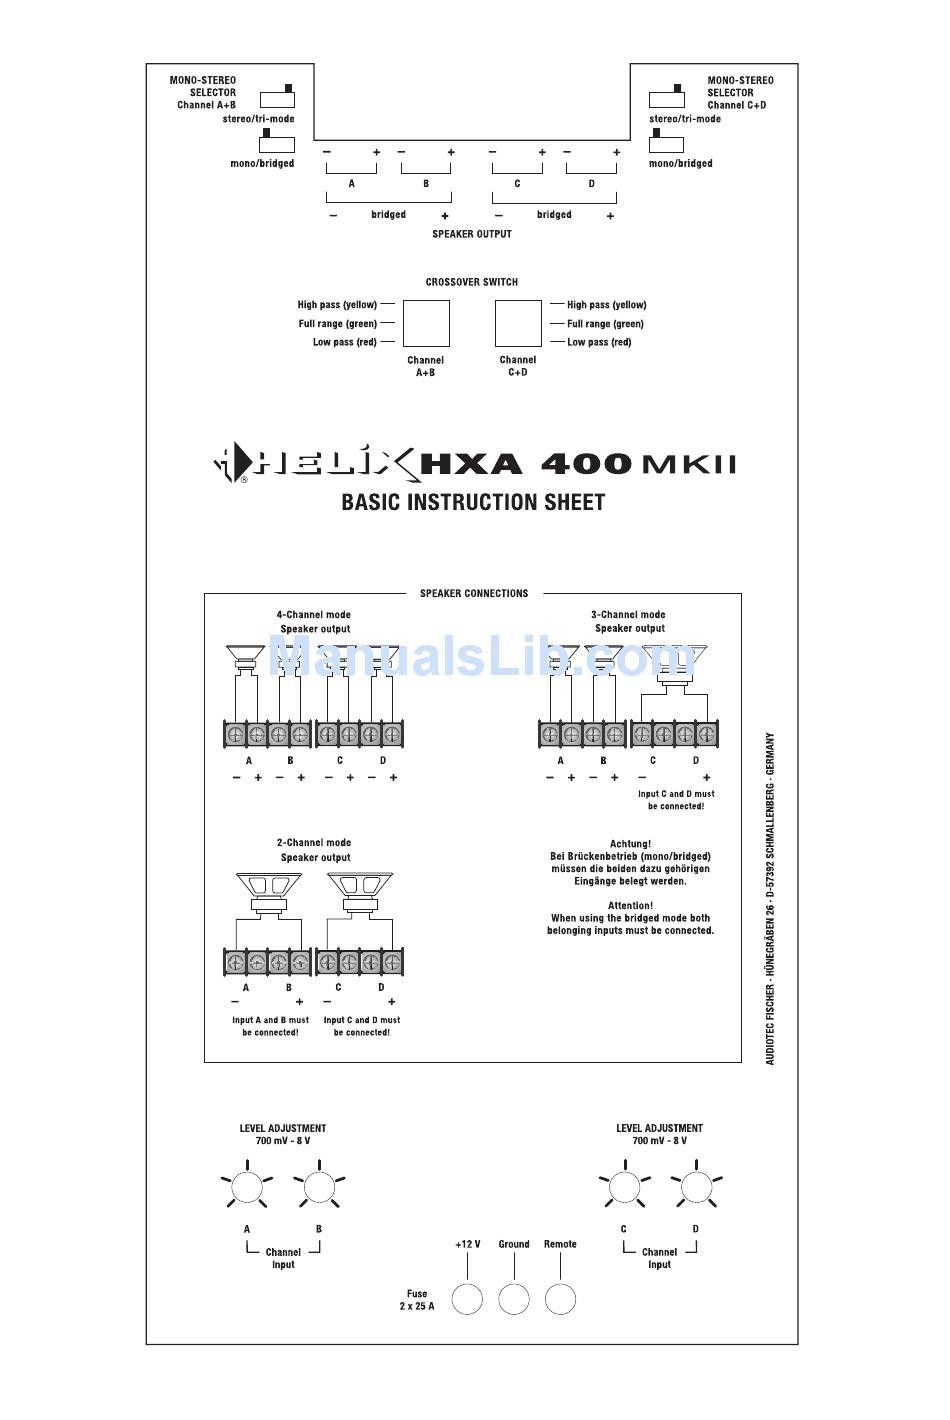 HELIX HXA 400 MKII - BASIC INSTRUCTIONS Pdf Download | ManualsLib